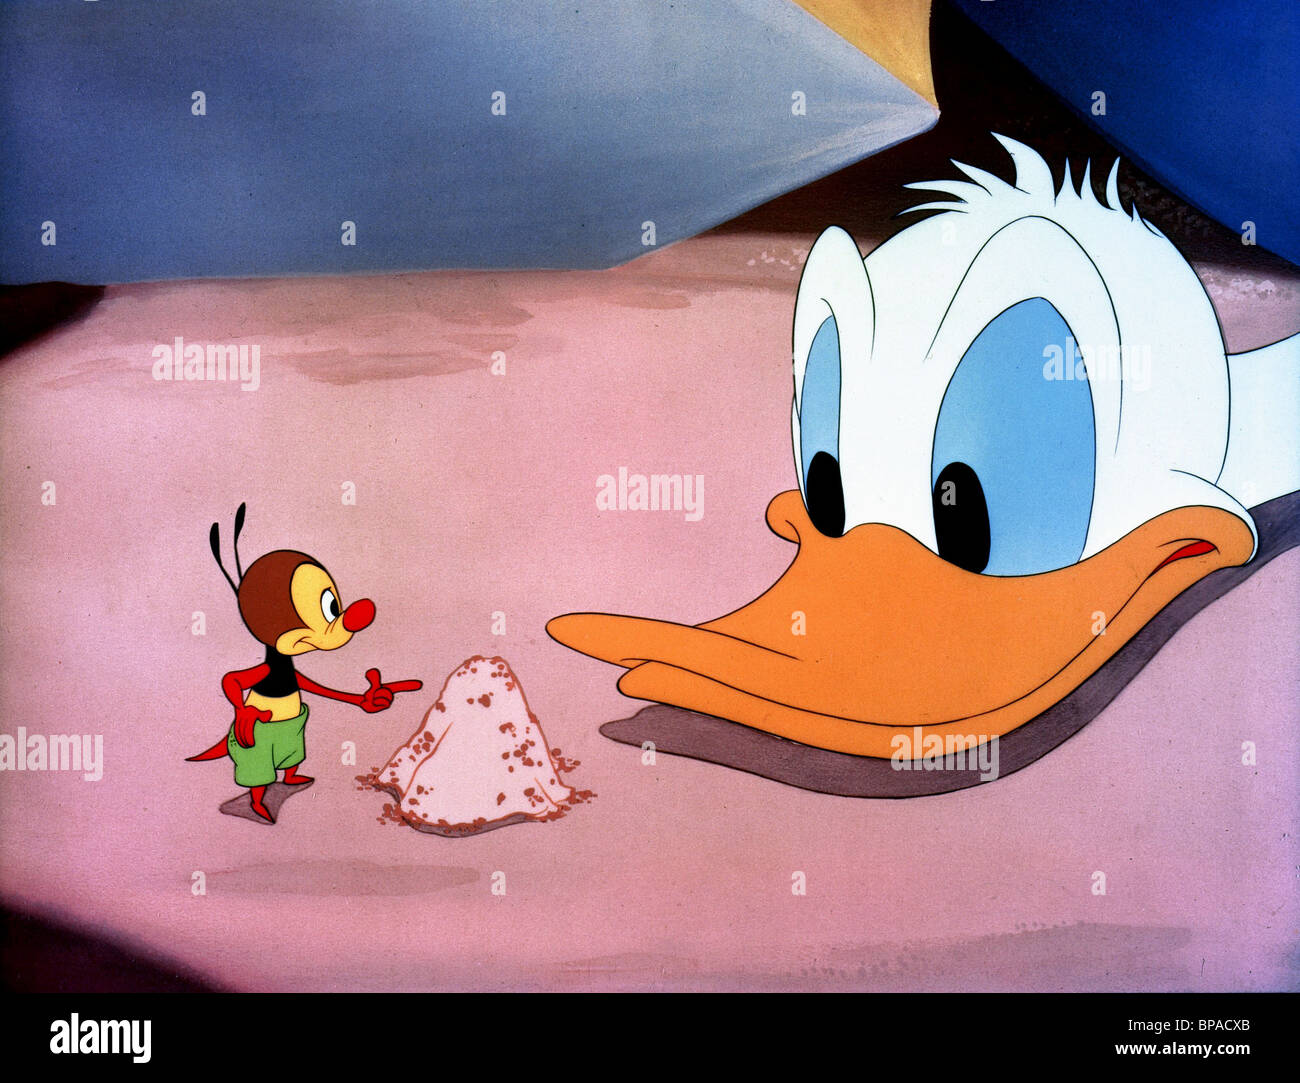 Disney cartoon hi-res stock photography and images - Alamy